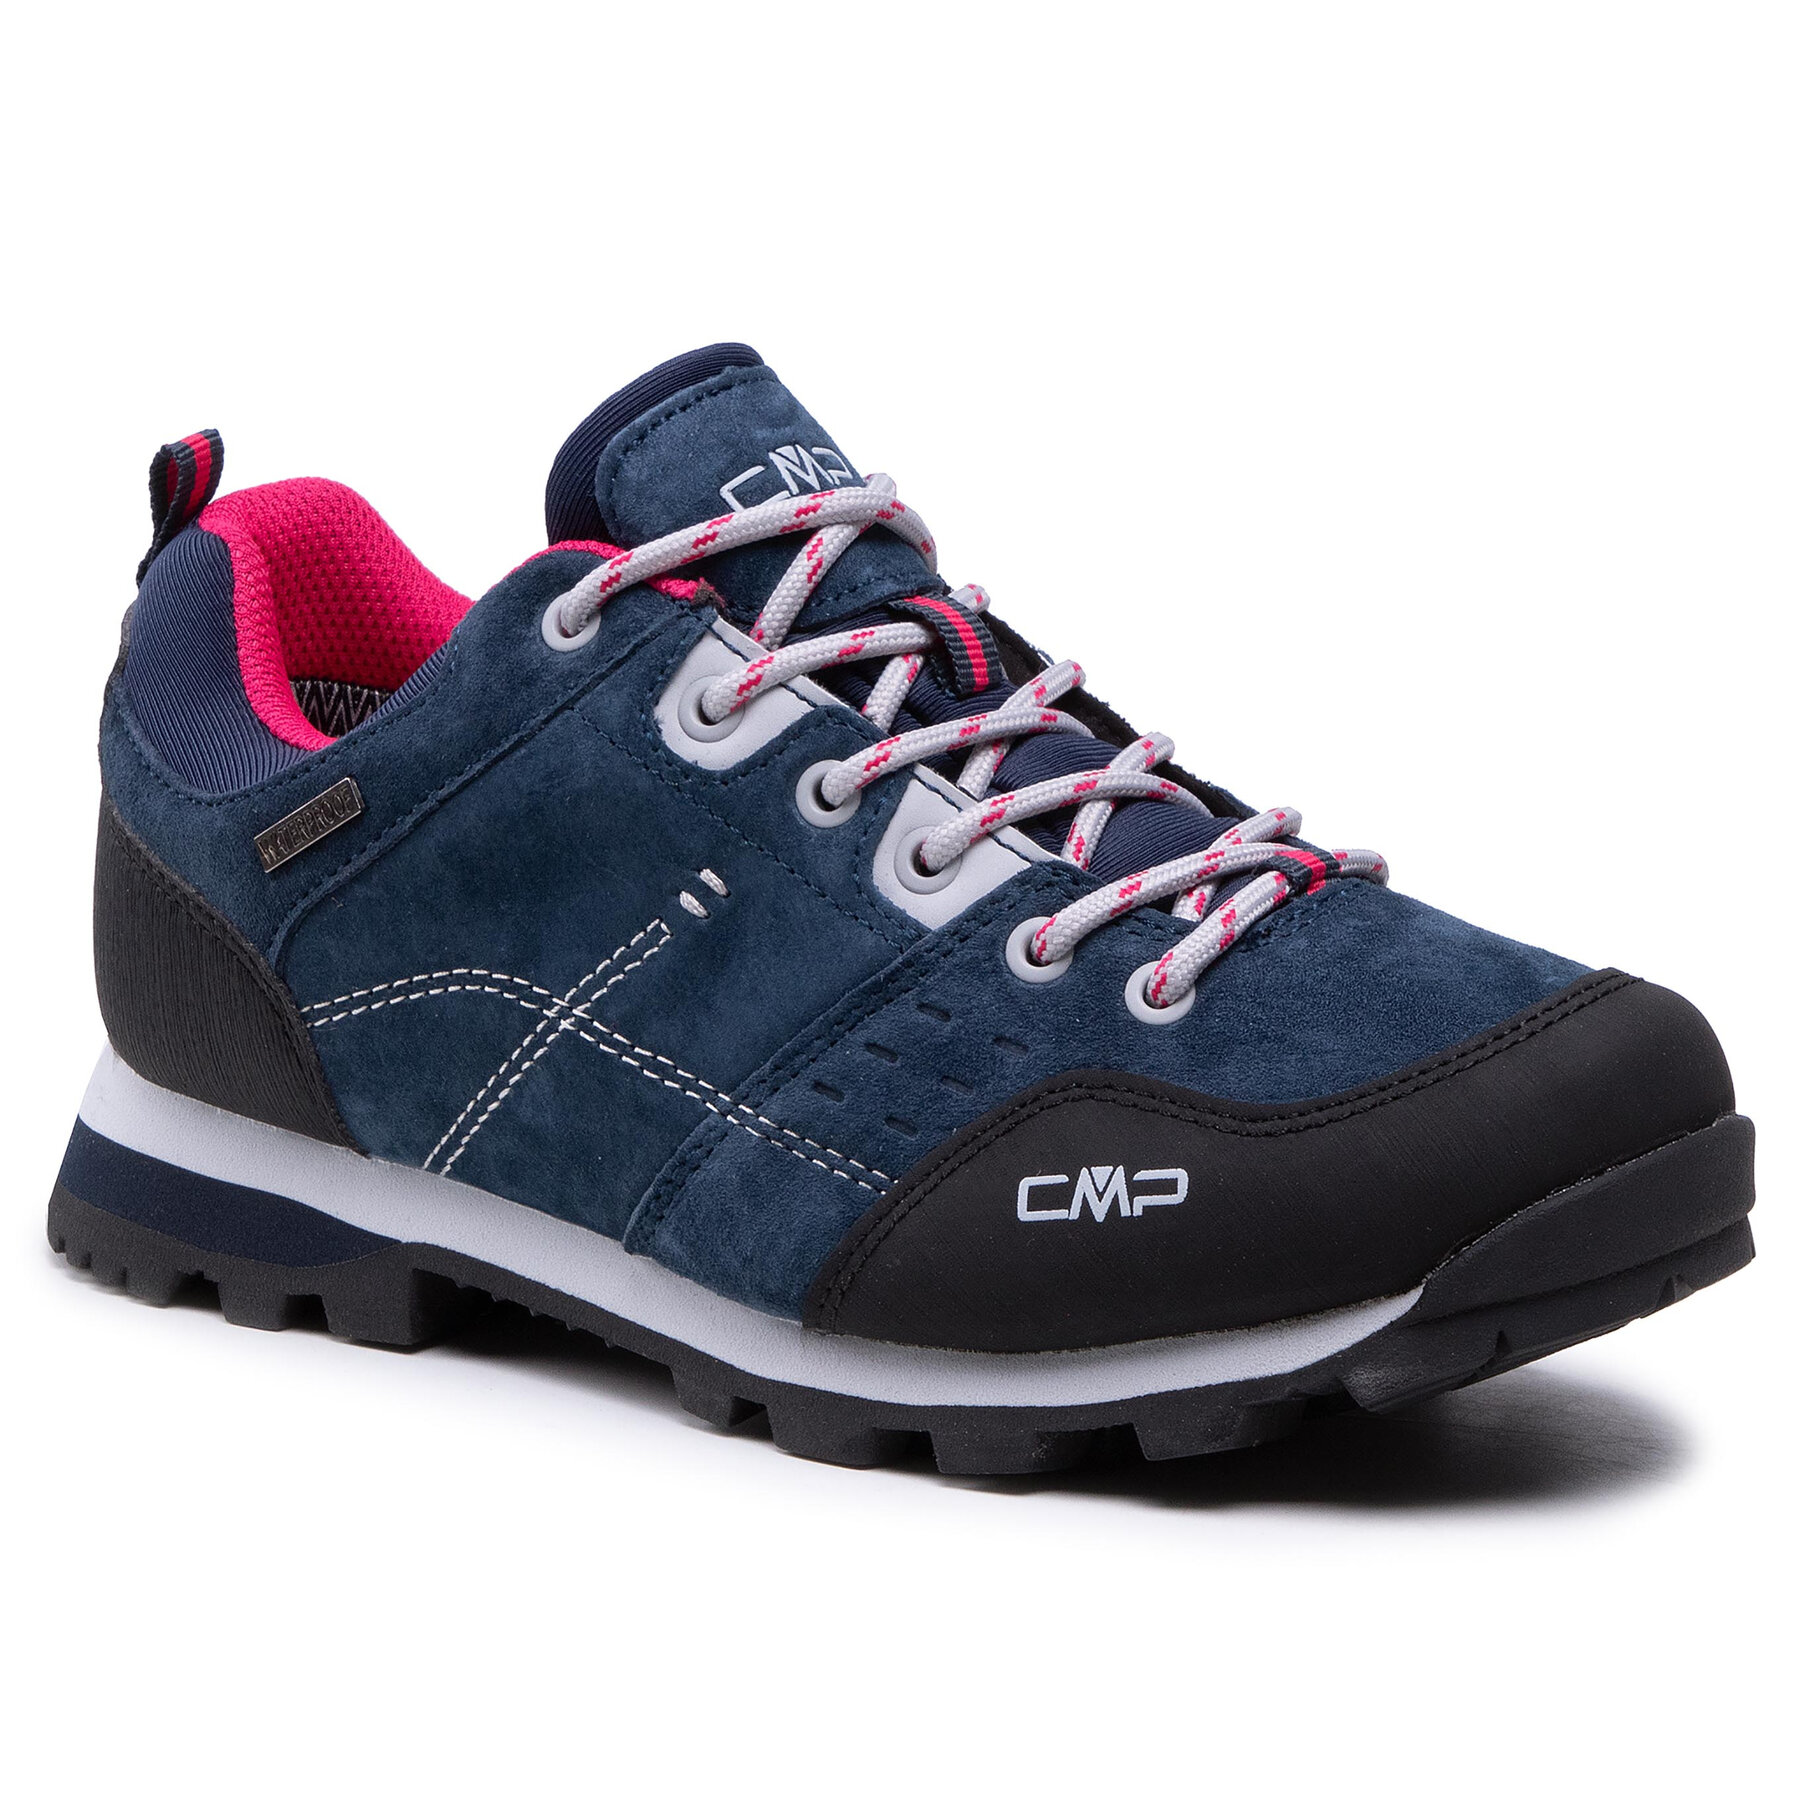 Trekking CMP Alcor Low Wmn Trekking Shoes Wp 39Q4896 Asphalt/Fragola 61UG